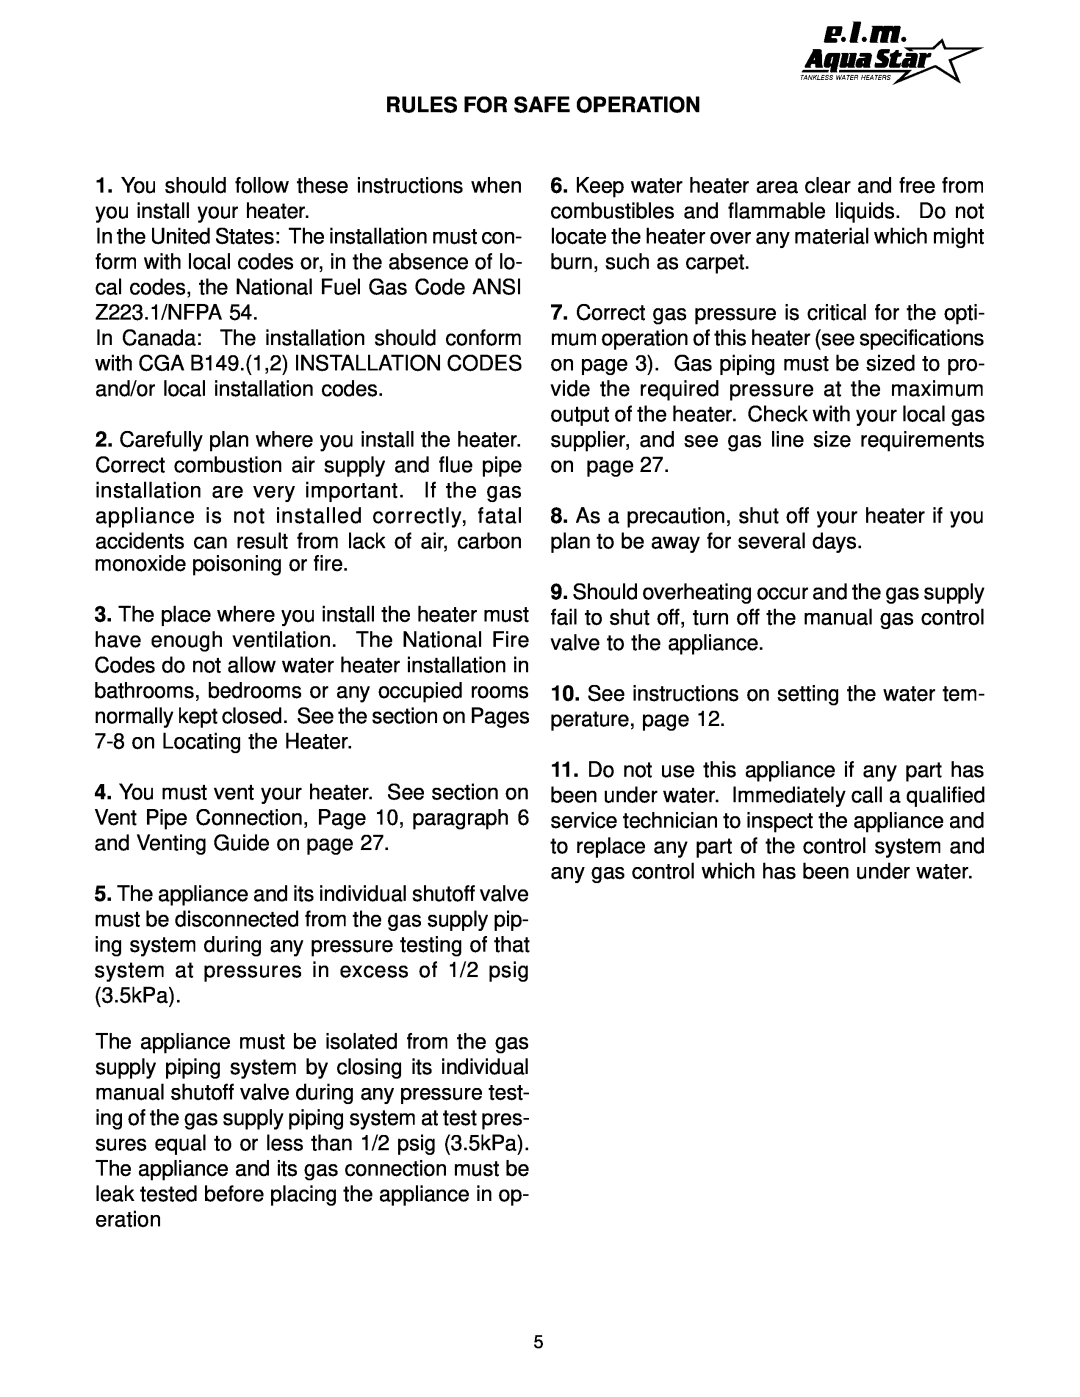 AquaStar 170 VP manual Rules For Safe Operation 